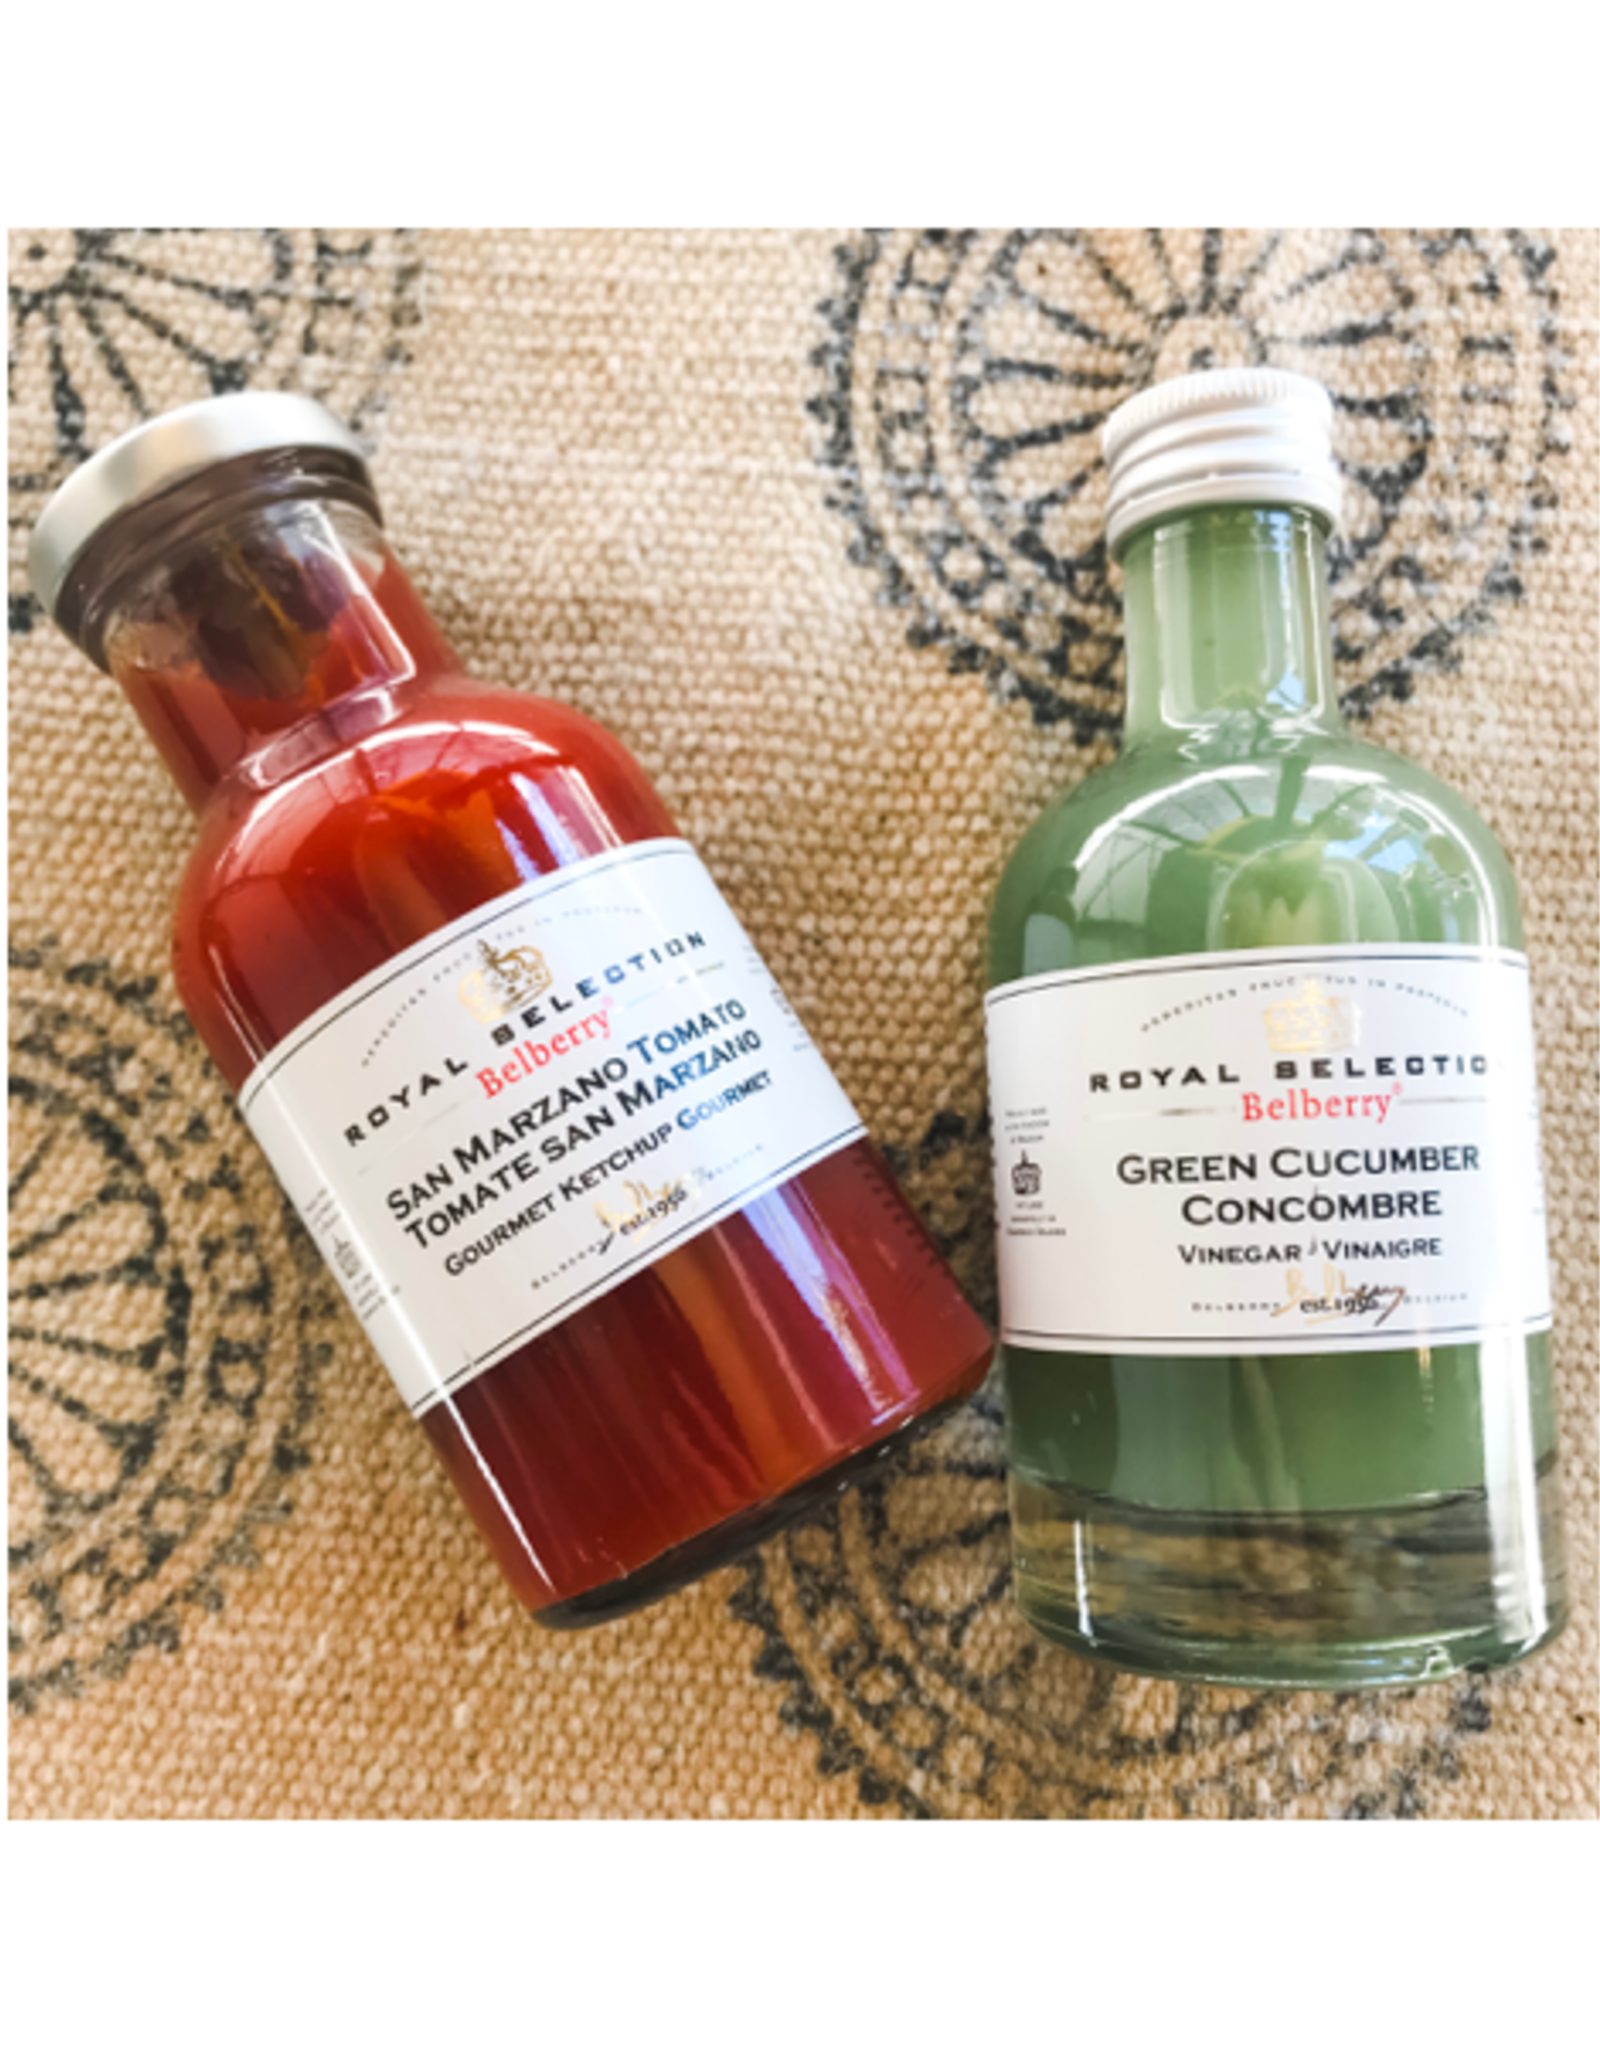 DLE - Belberry / Green Cucumber Vinegar, 200ml